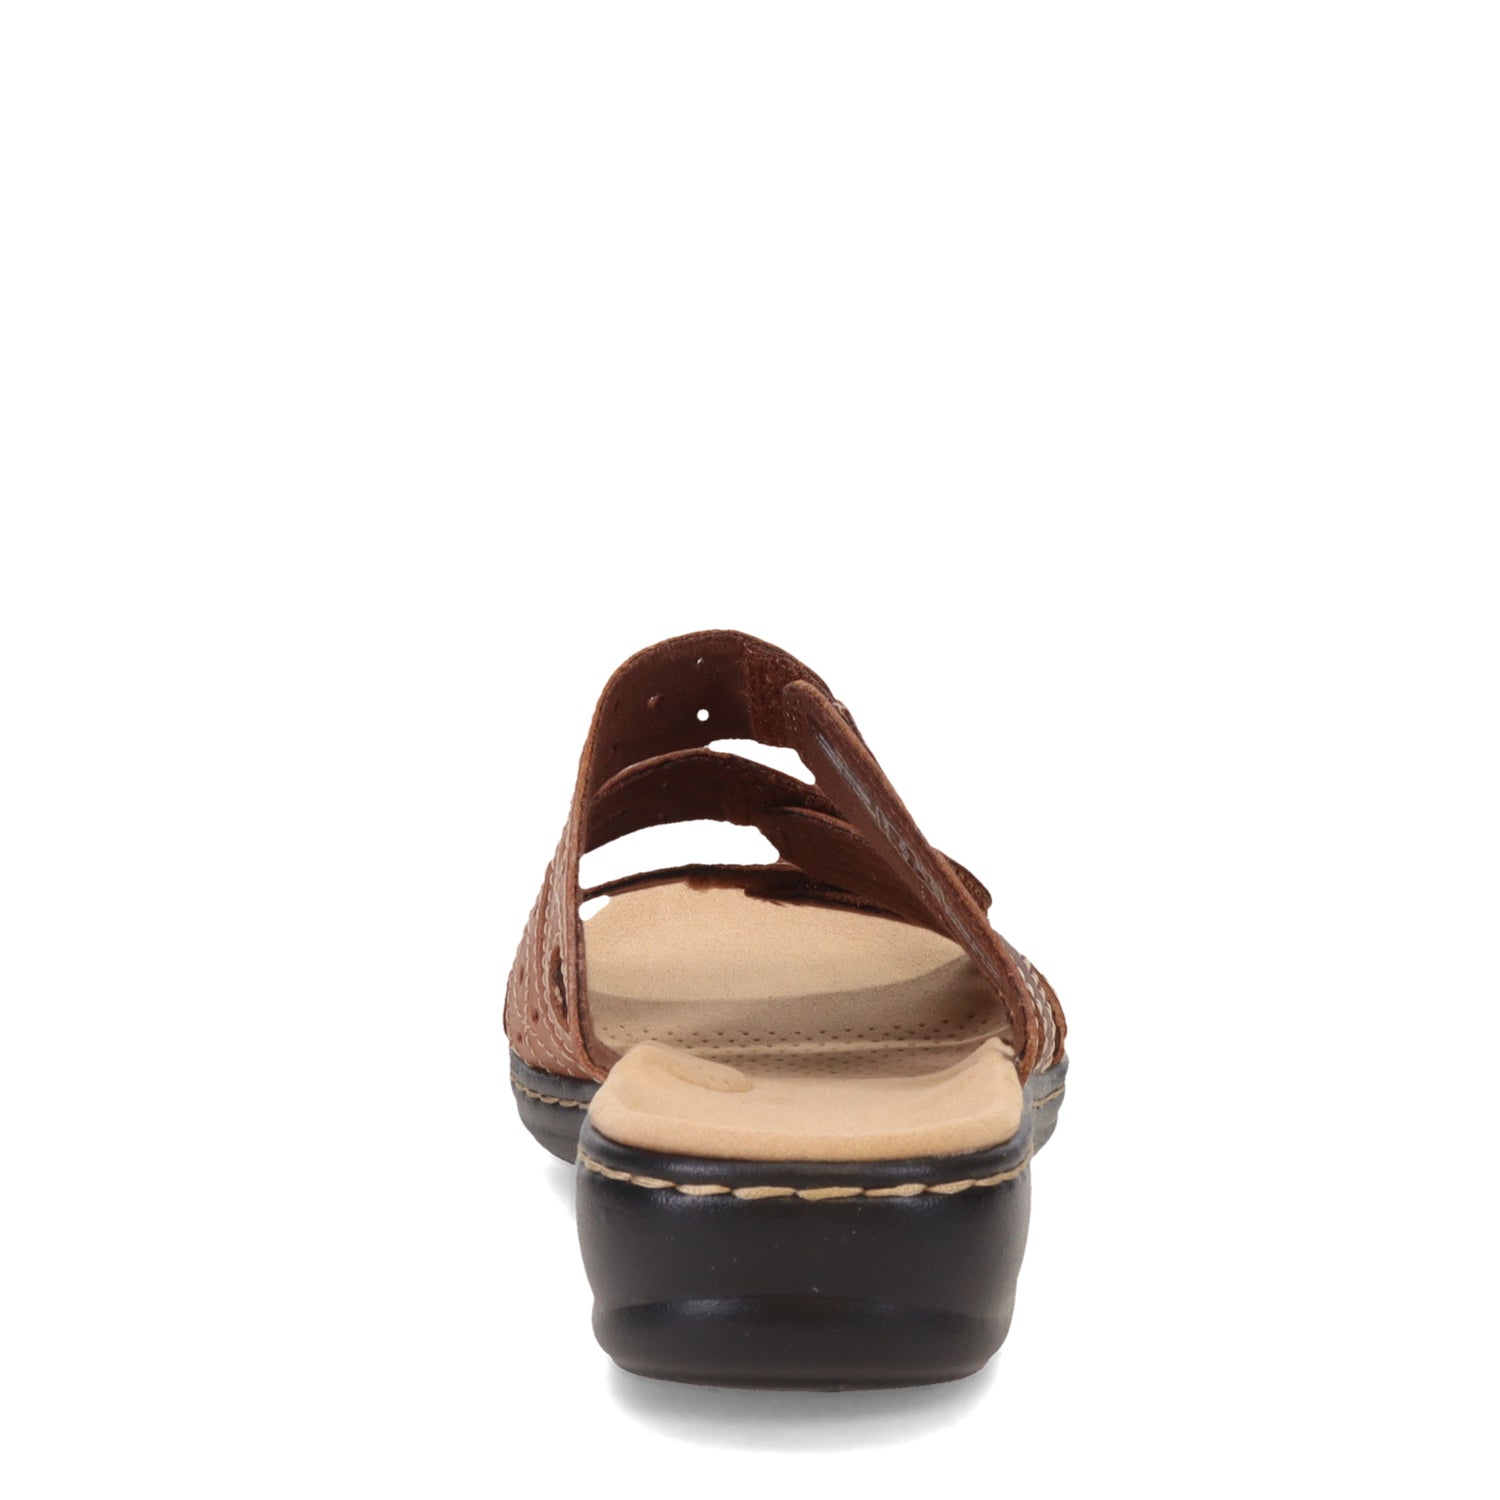 Peltz Shoes  Women's Clarks Leisa Cacti Sandal BROWN 26117619